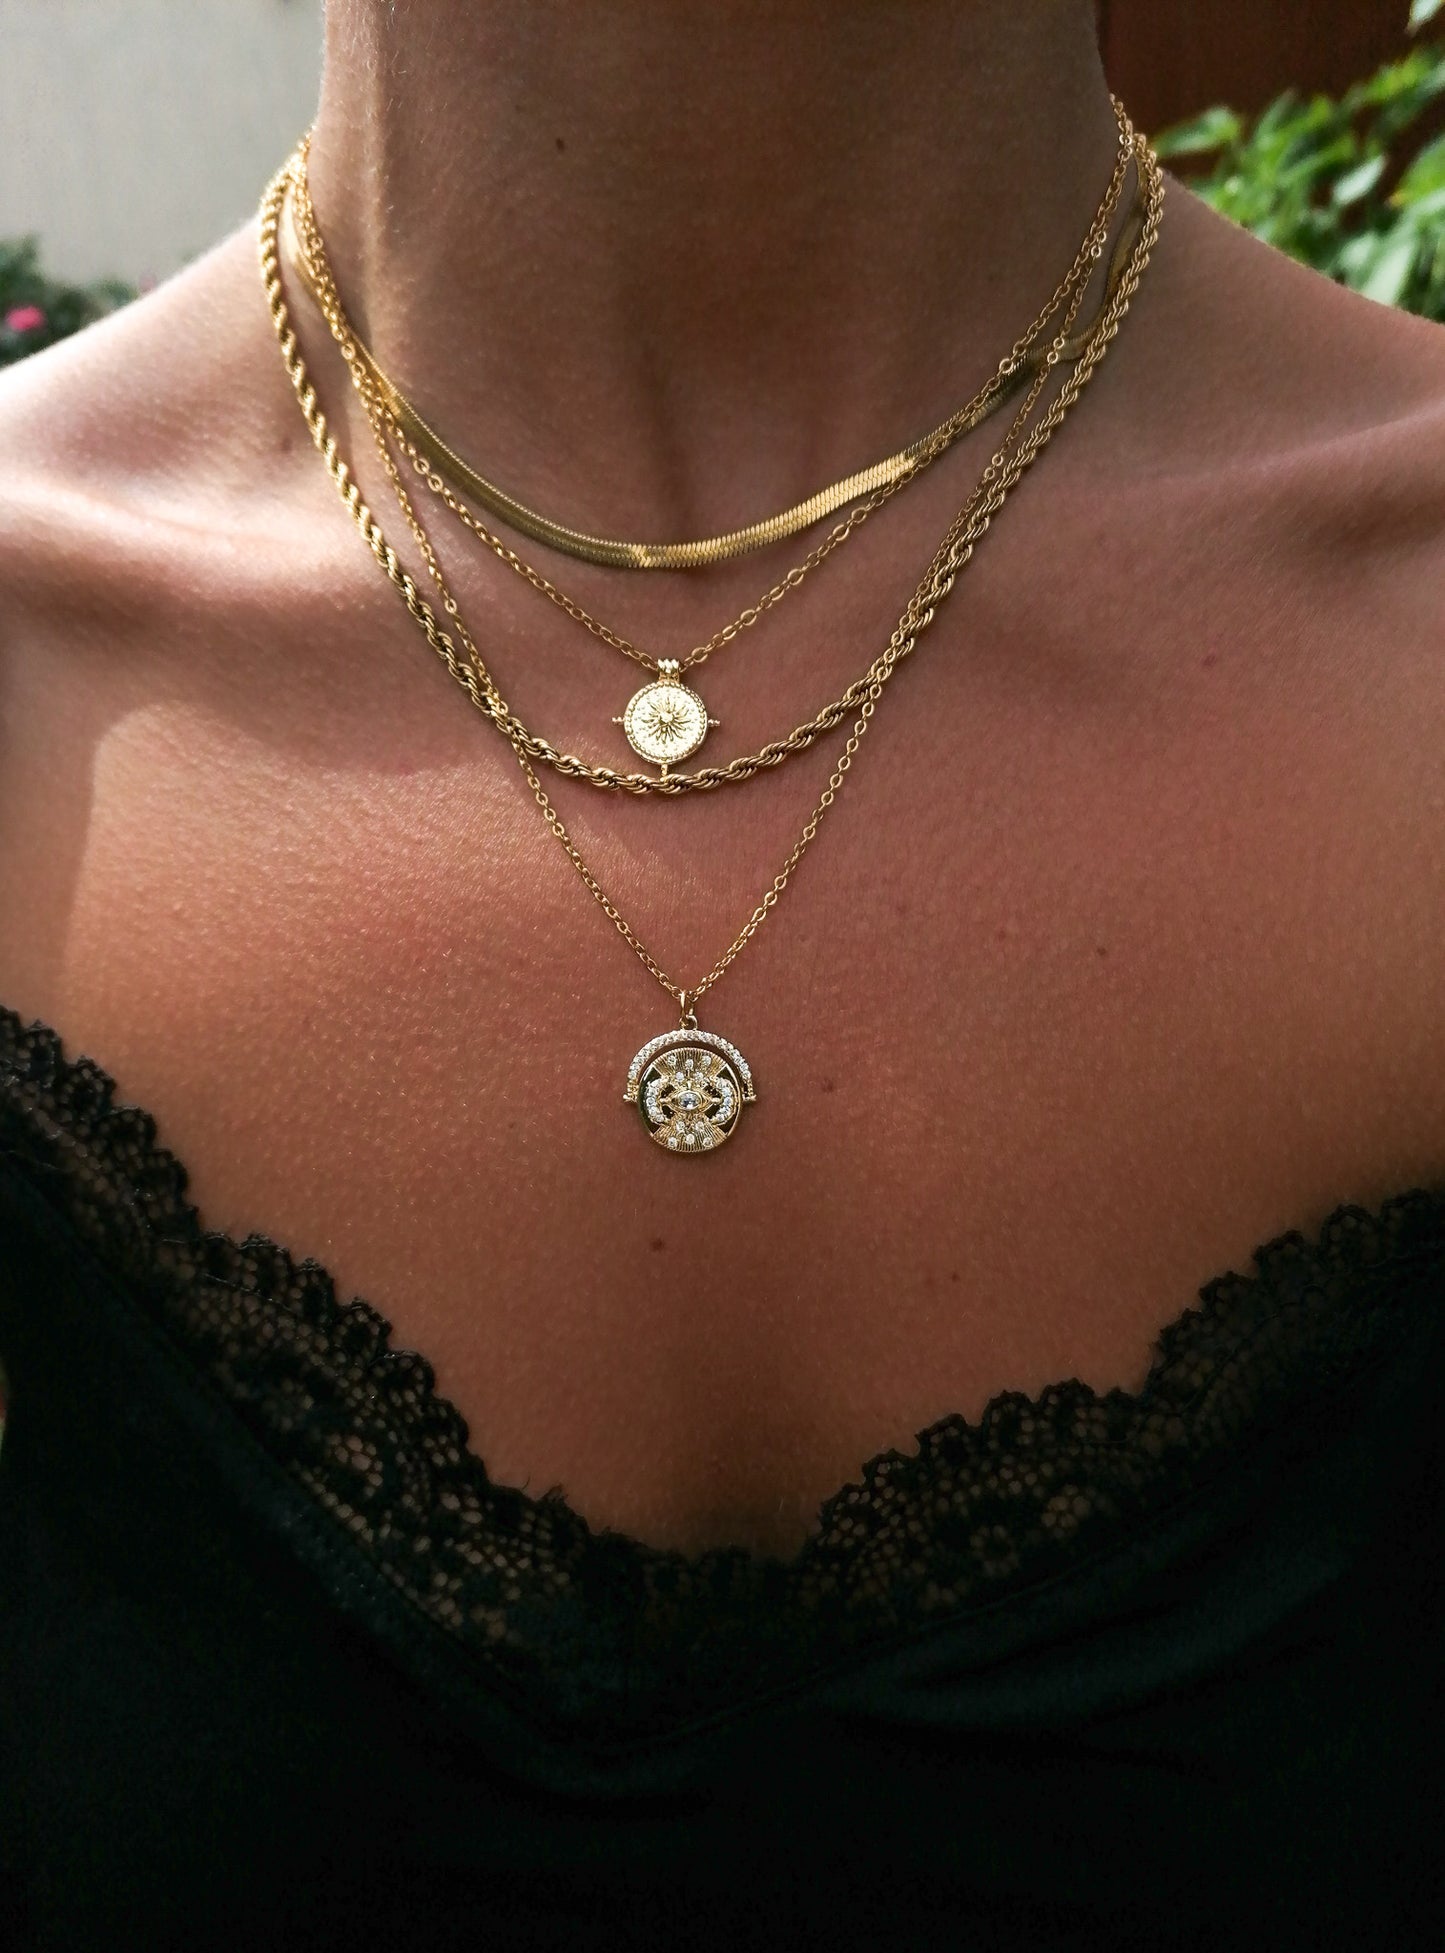 The Sun coin necklace